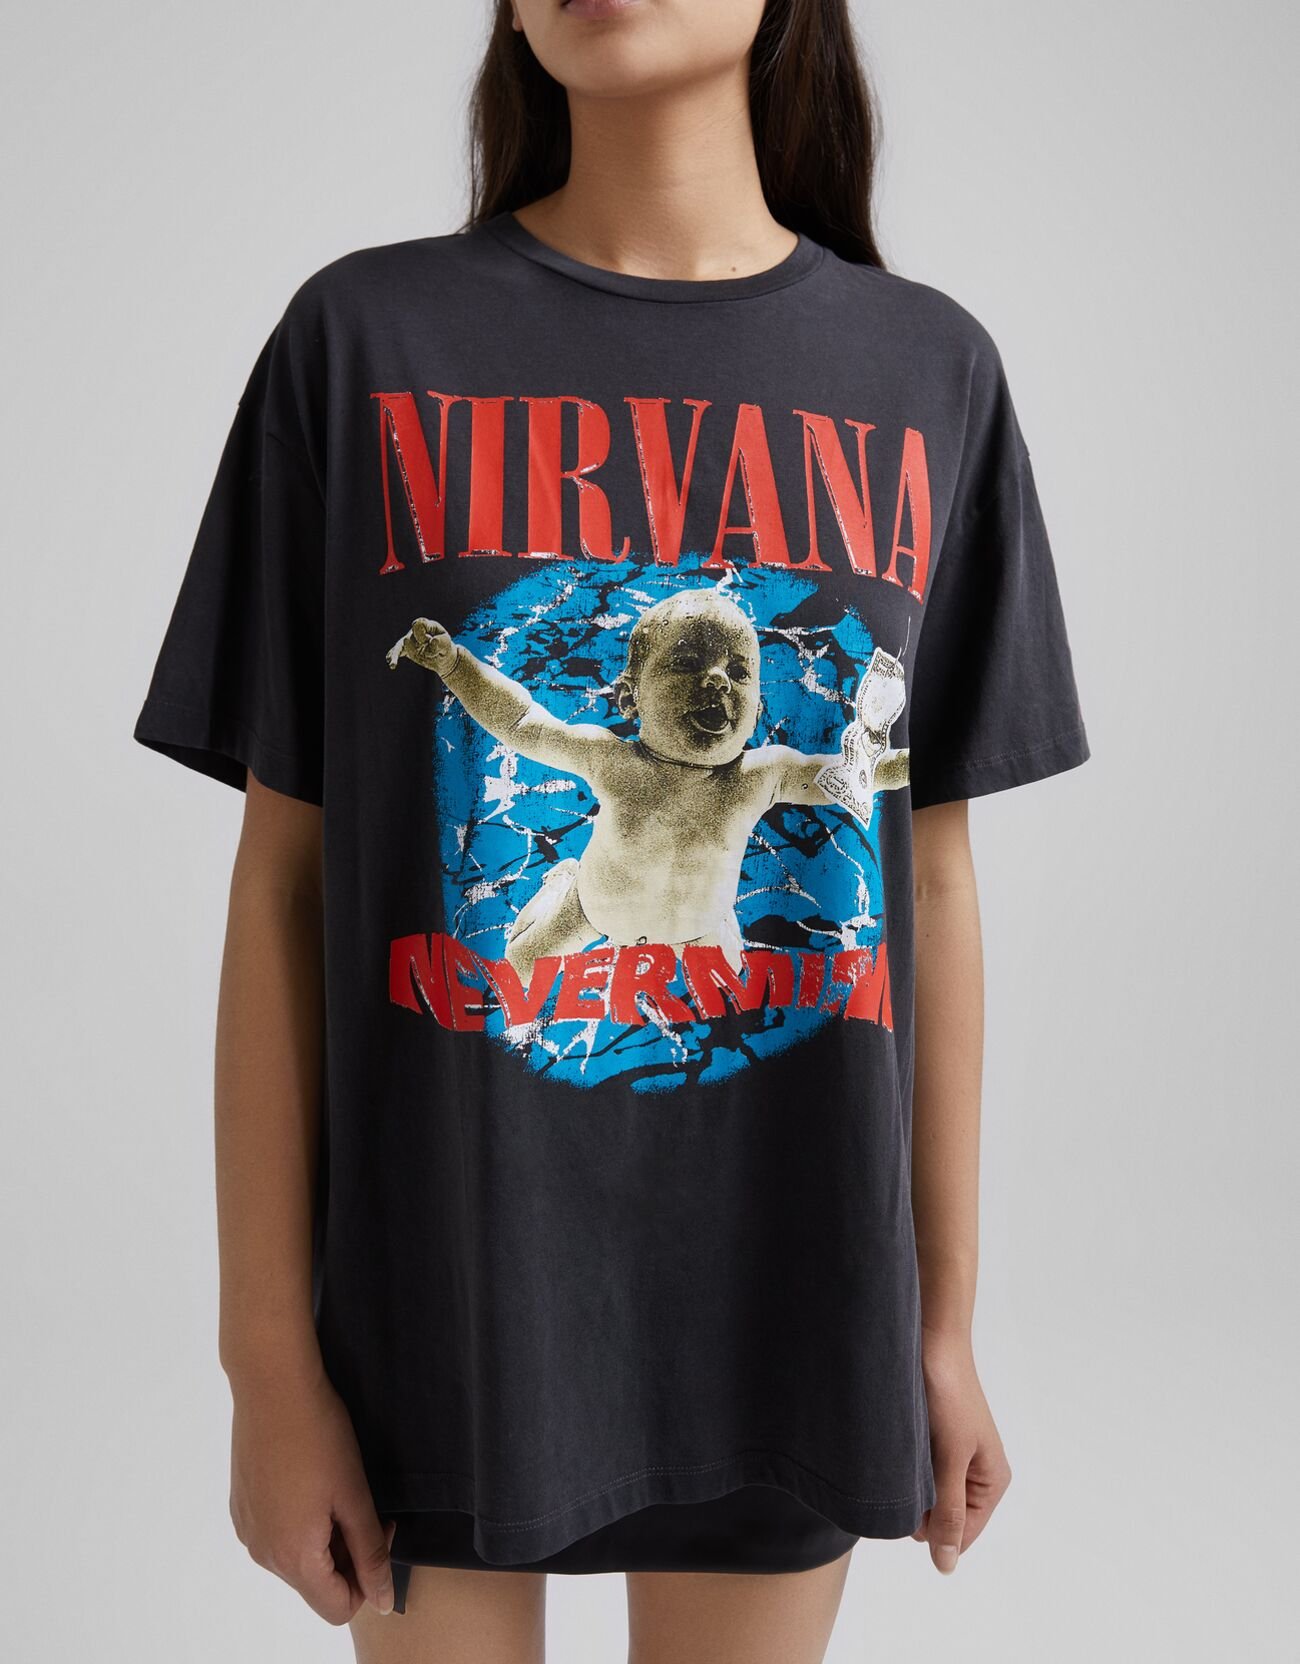 Zanahoria radio Ecología styles arig 💗 on Twitter: "· Camiseta Nirvana ·🏷Bershka ·💸Agotada  https://t.co/LIvWVOiqms" / Twitter